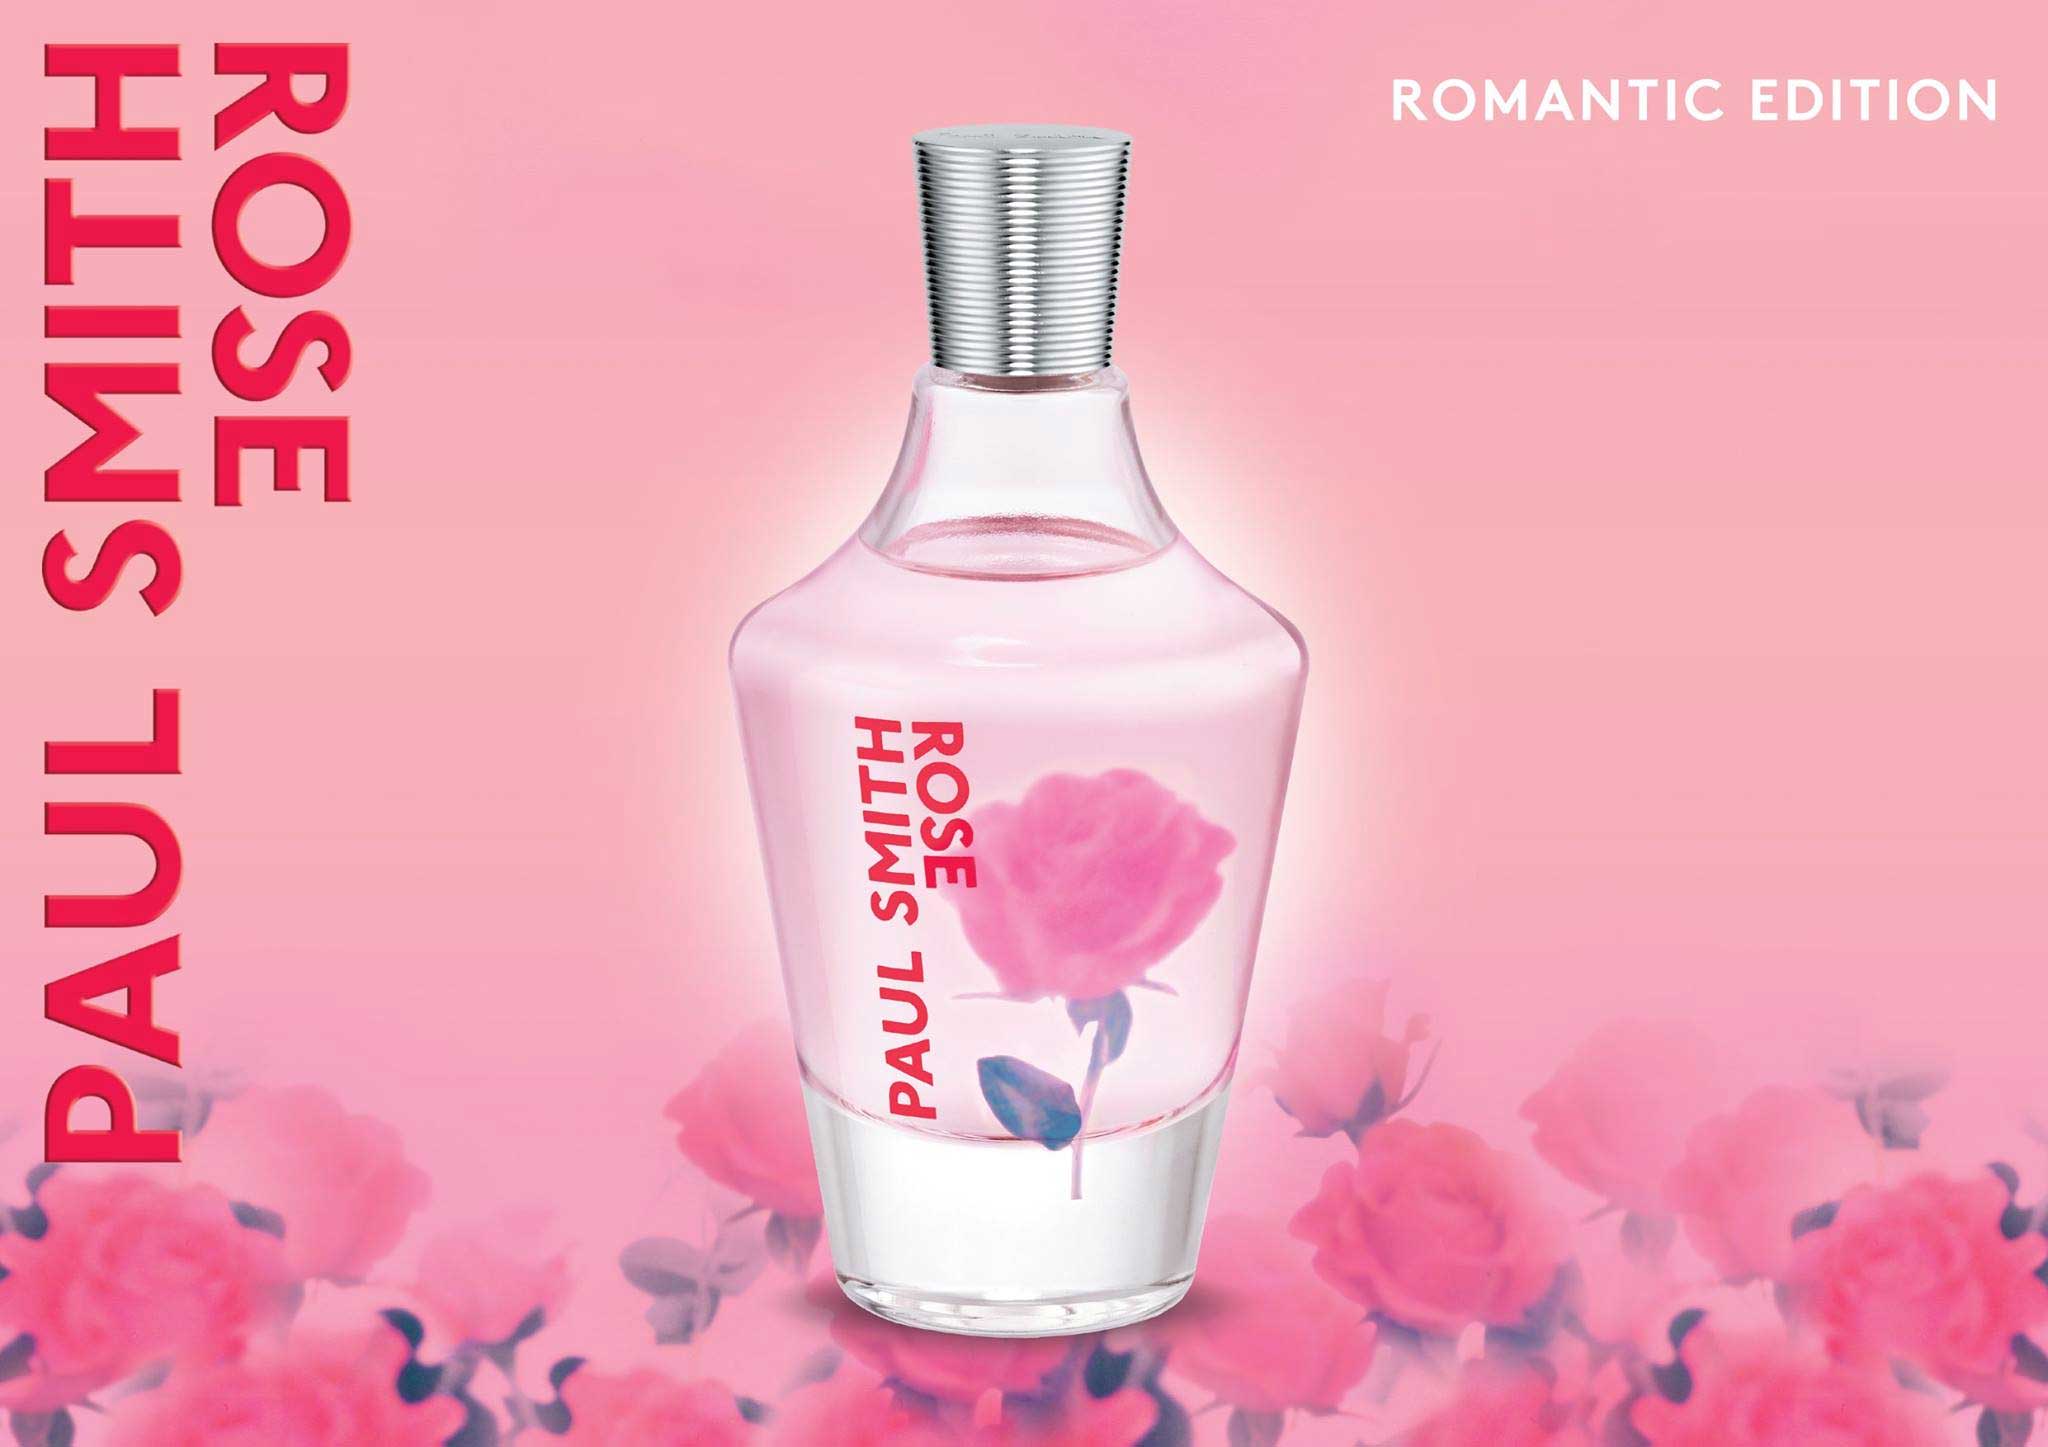 Paul Smith Rose Romantic Edition Paul Smith perfume - una nuevo